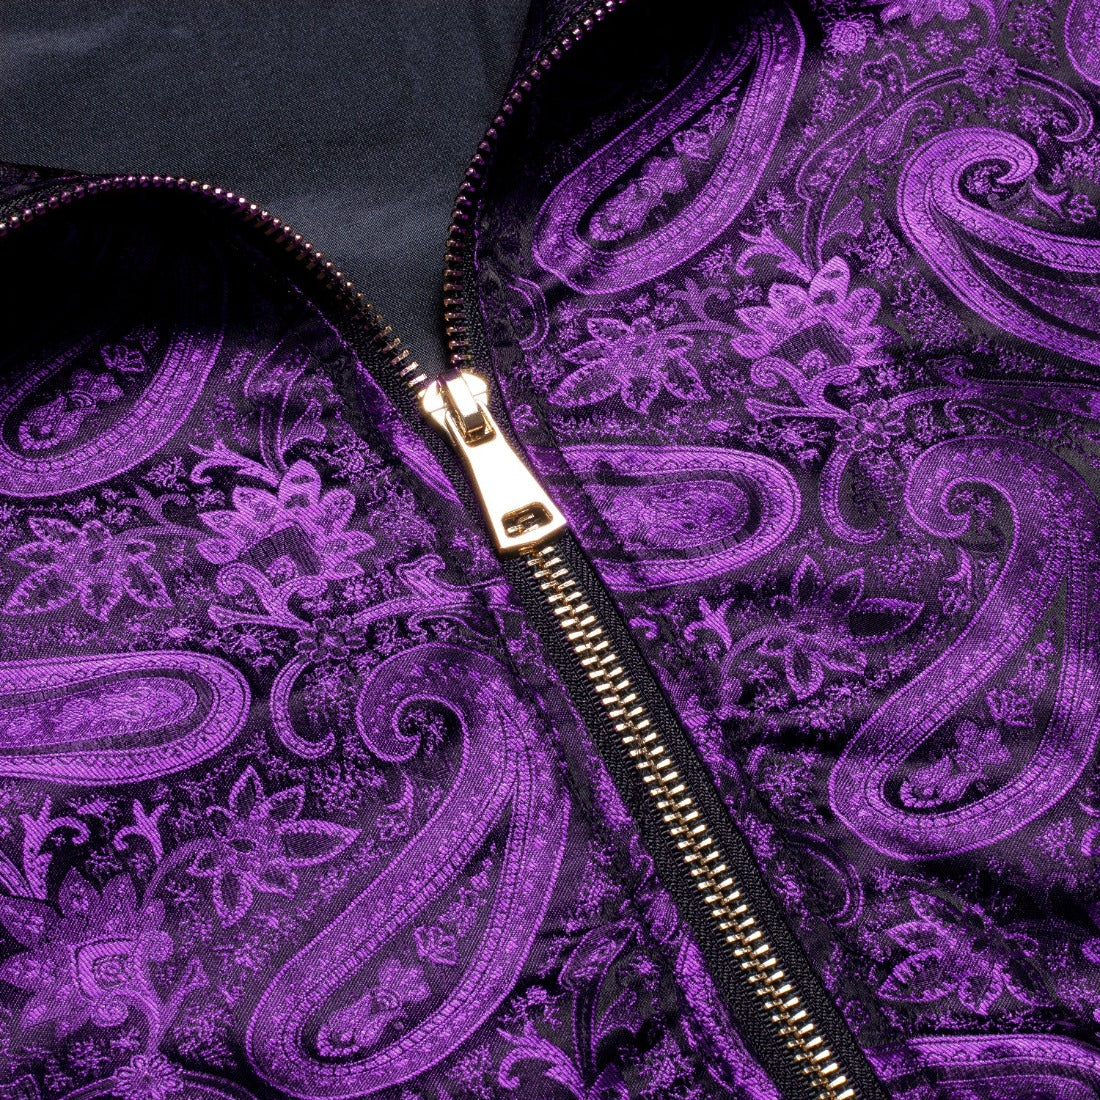 New Black Purple Paisley Men's Urban Lightweight Zip Jacket Casual